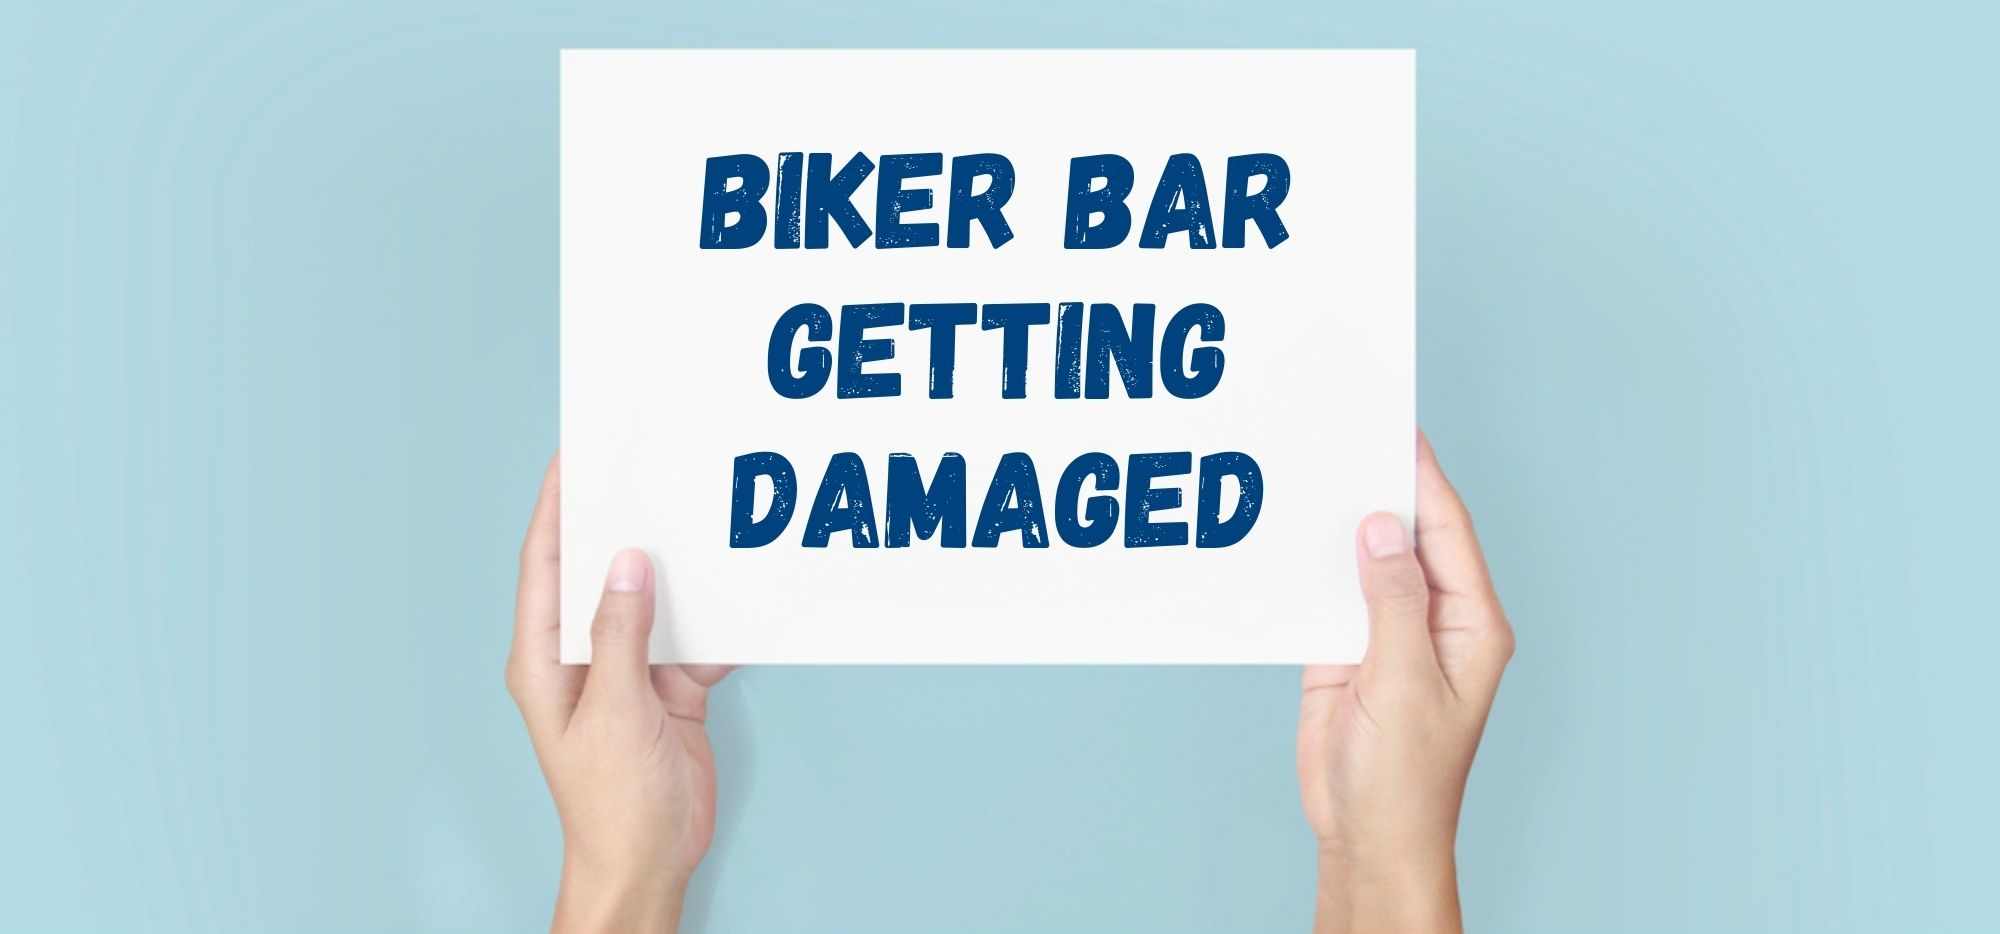 Biker Bar Getting Damaged